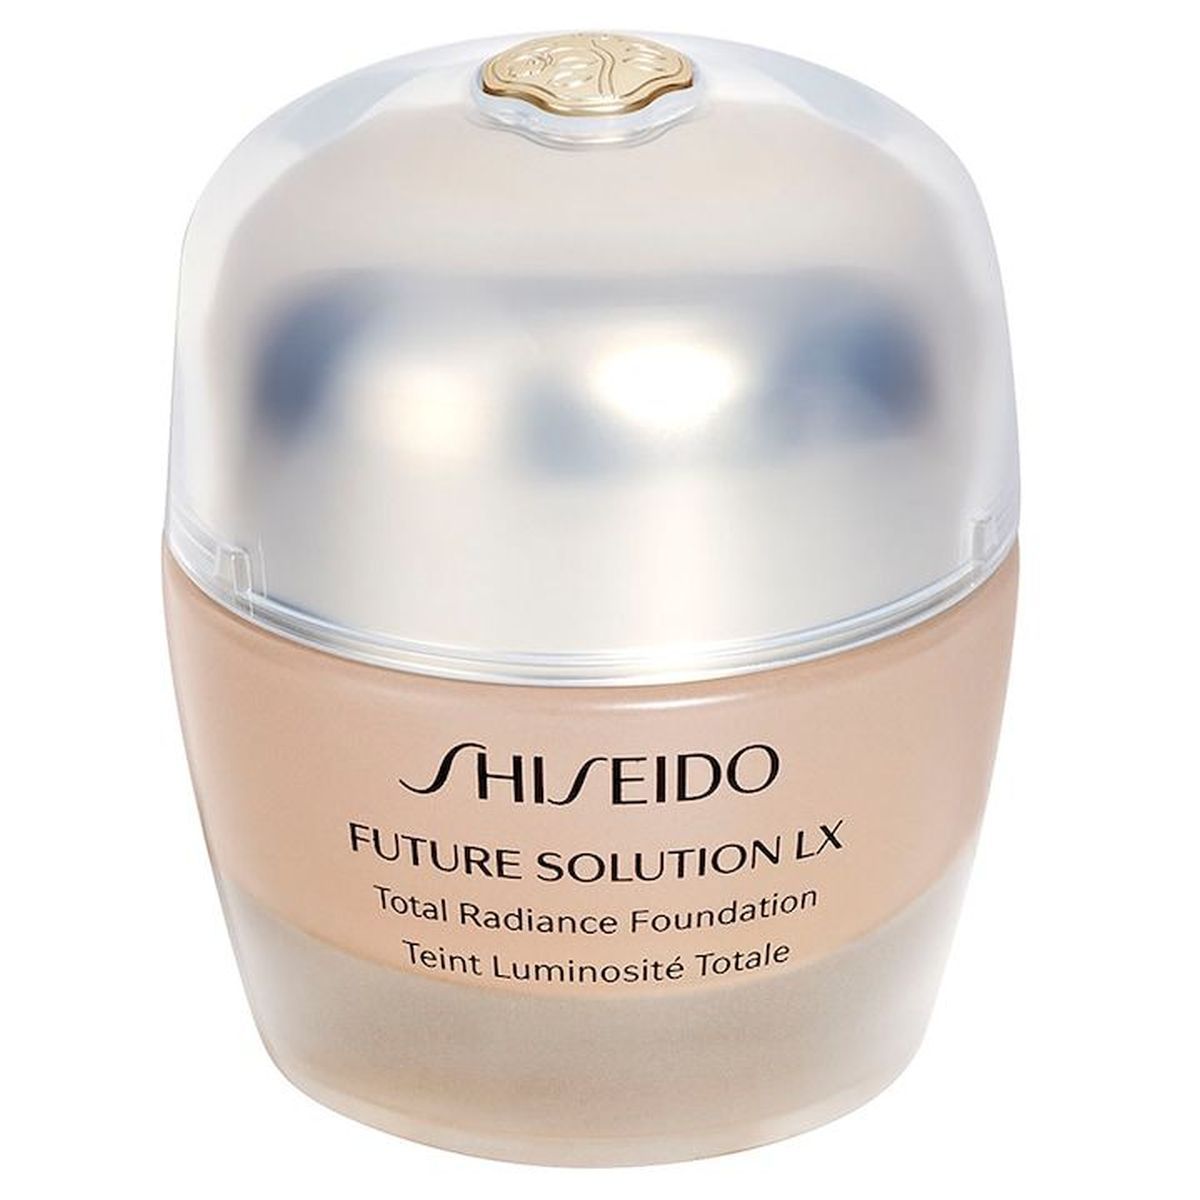 Shiseido solution lx. Shiseido Future solution LX. Shiseido Future solution набор. Shiseido Future solution LX оттенки. Крем для лица шисейдо антивозрастной.